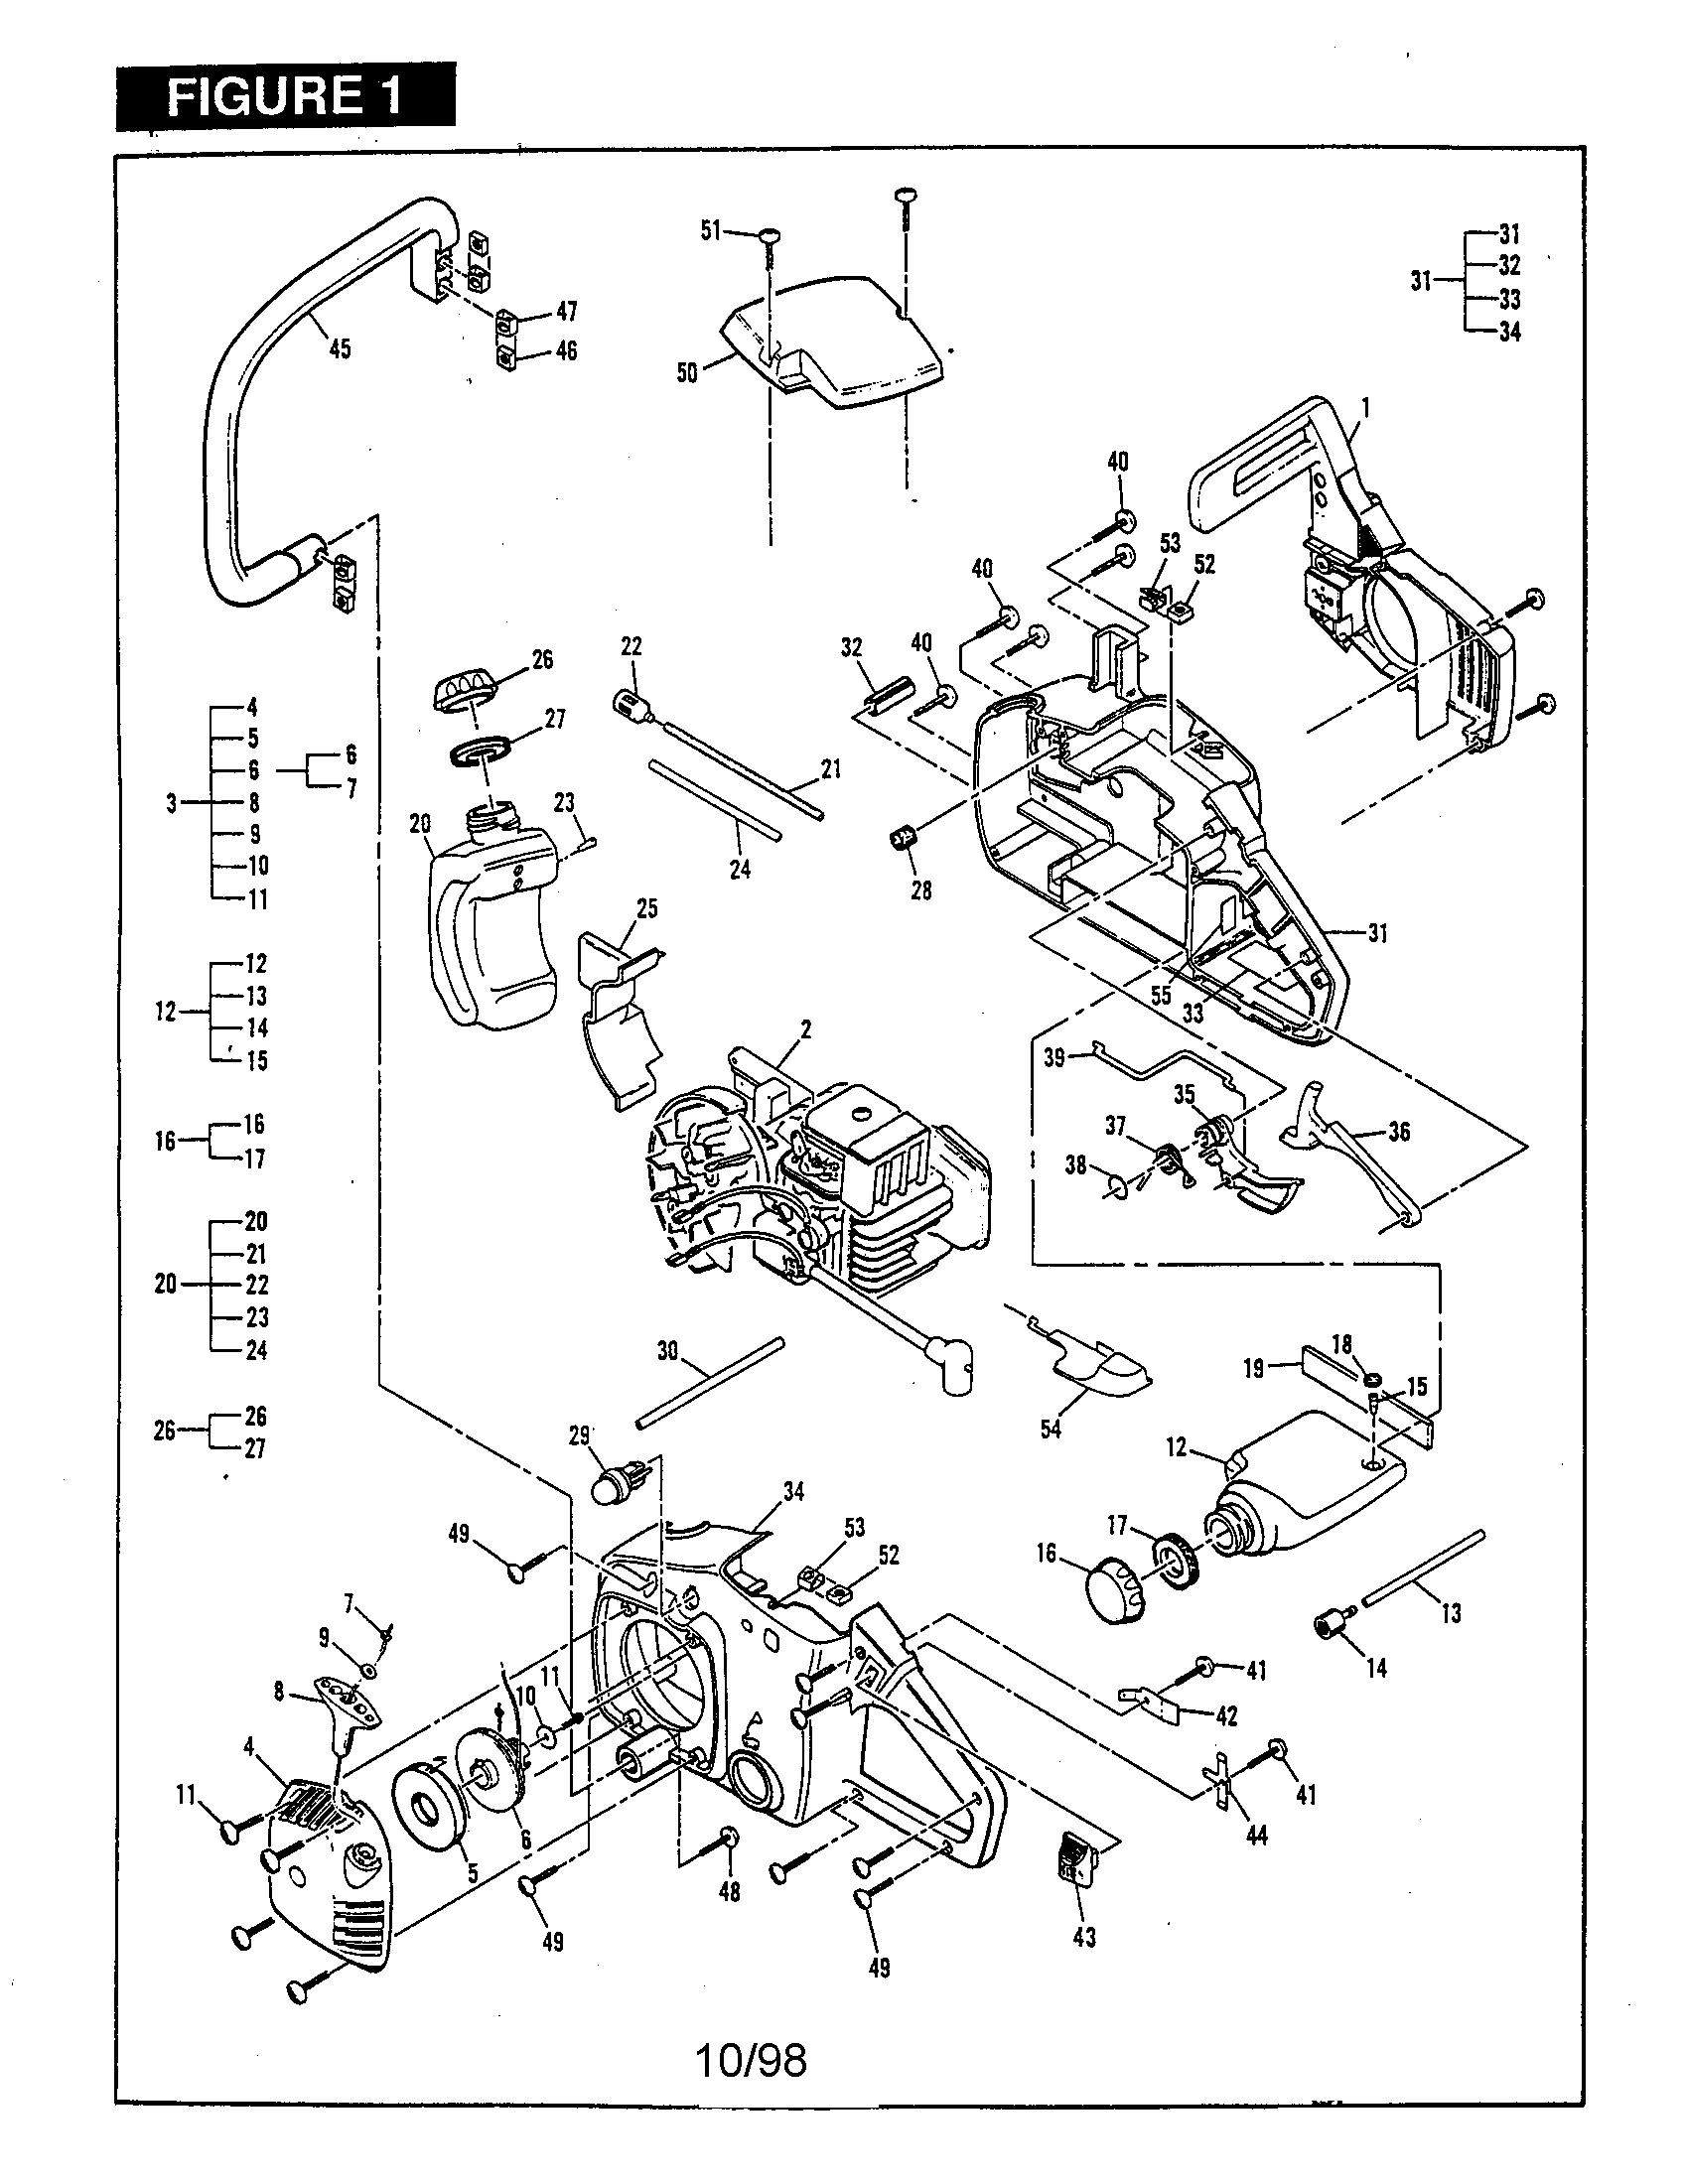 Mac 3200 chainsaw parts manual